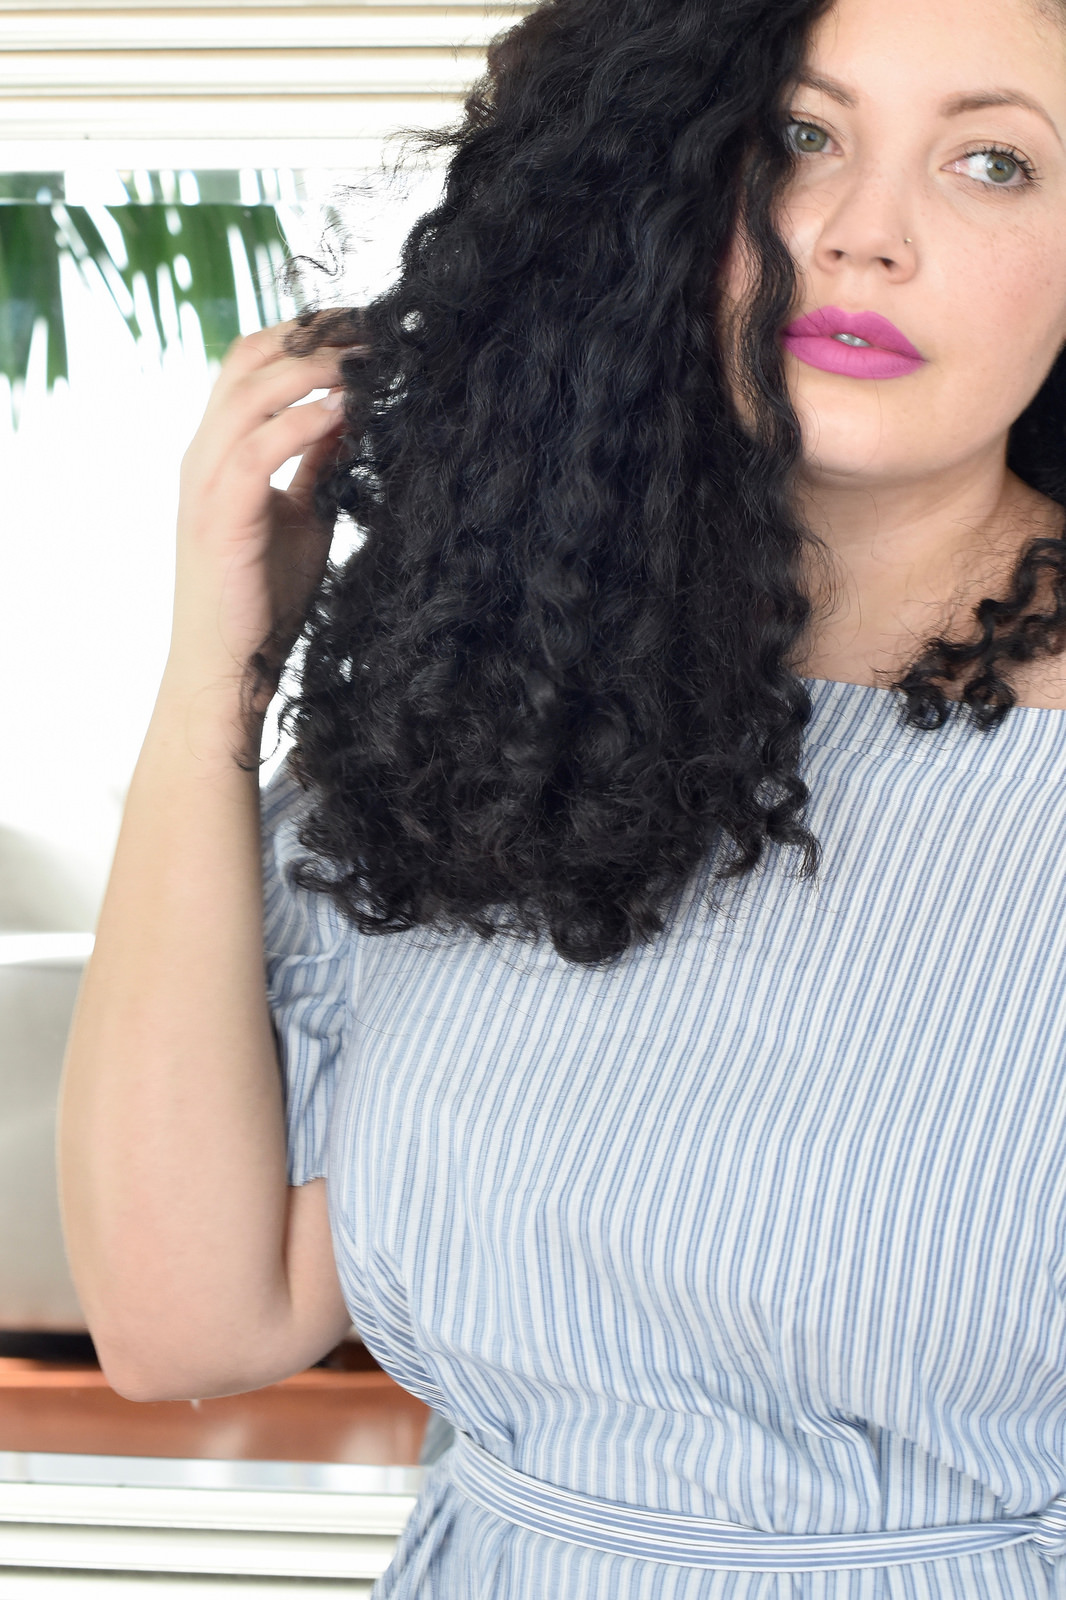 How to Get Healthier, Shinier Hair via @GirlWithCurves